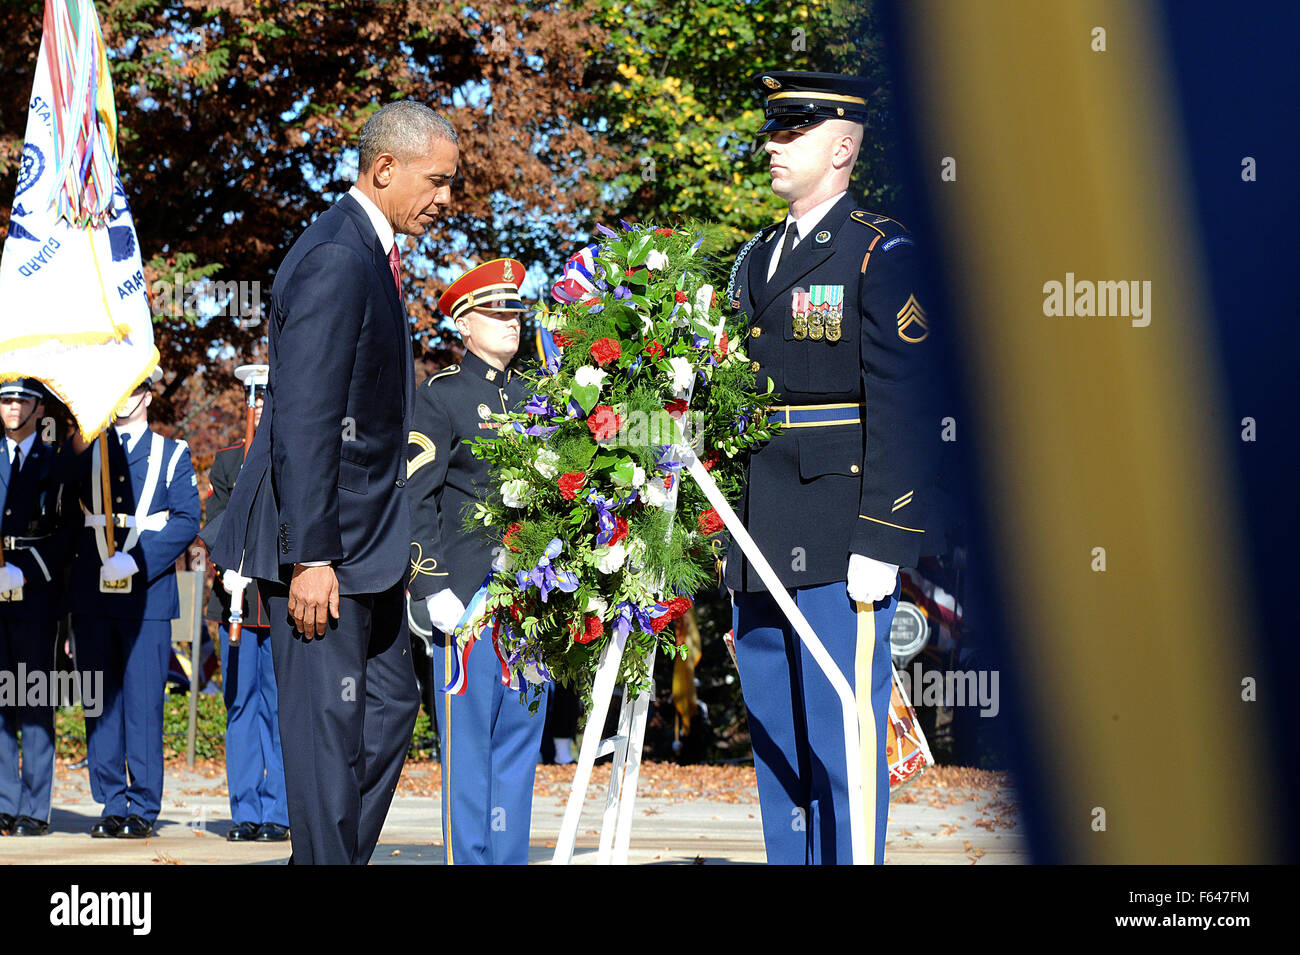 Arlington National Cemetery, USA. 11th November, 2015. U.S. President Barack Obama places a wreath in honor of Veterans Day at Arlington National Cemetery November 11, 2015 in Arlington, Virginia. Stock Photo